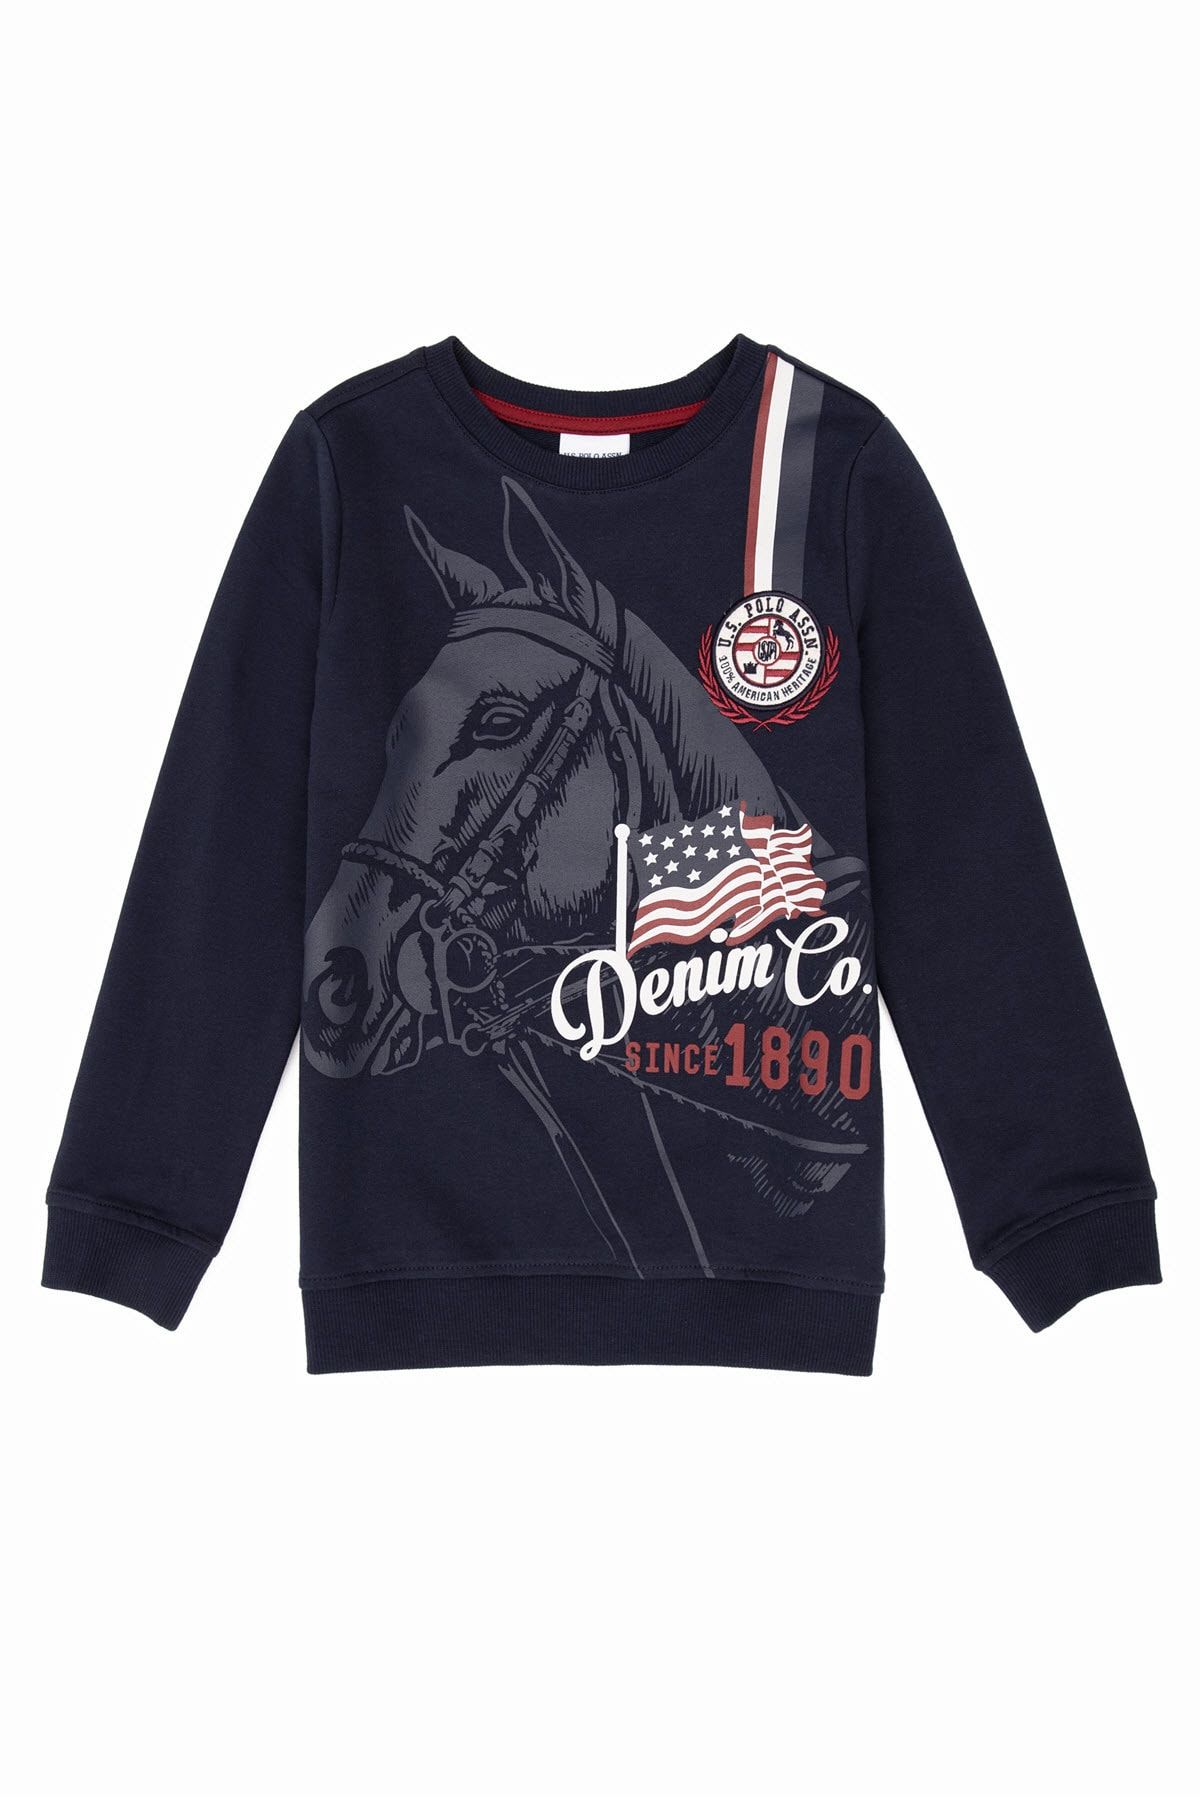 U.S. Polo Assn. Lacivert Erkek Çocuk Sweatshirt